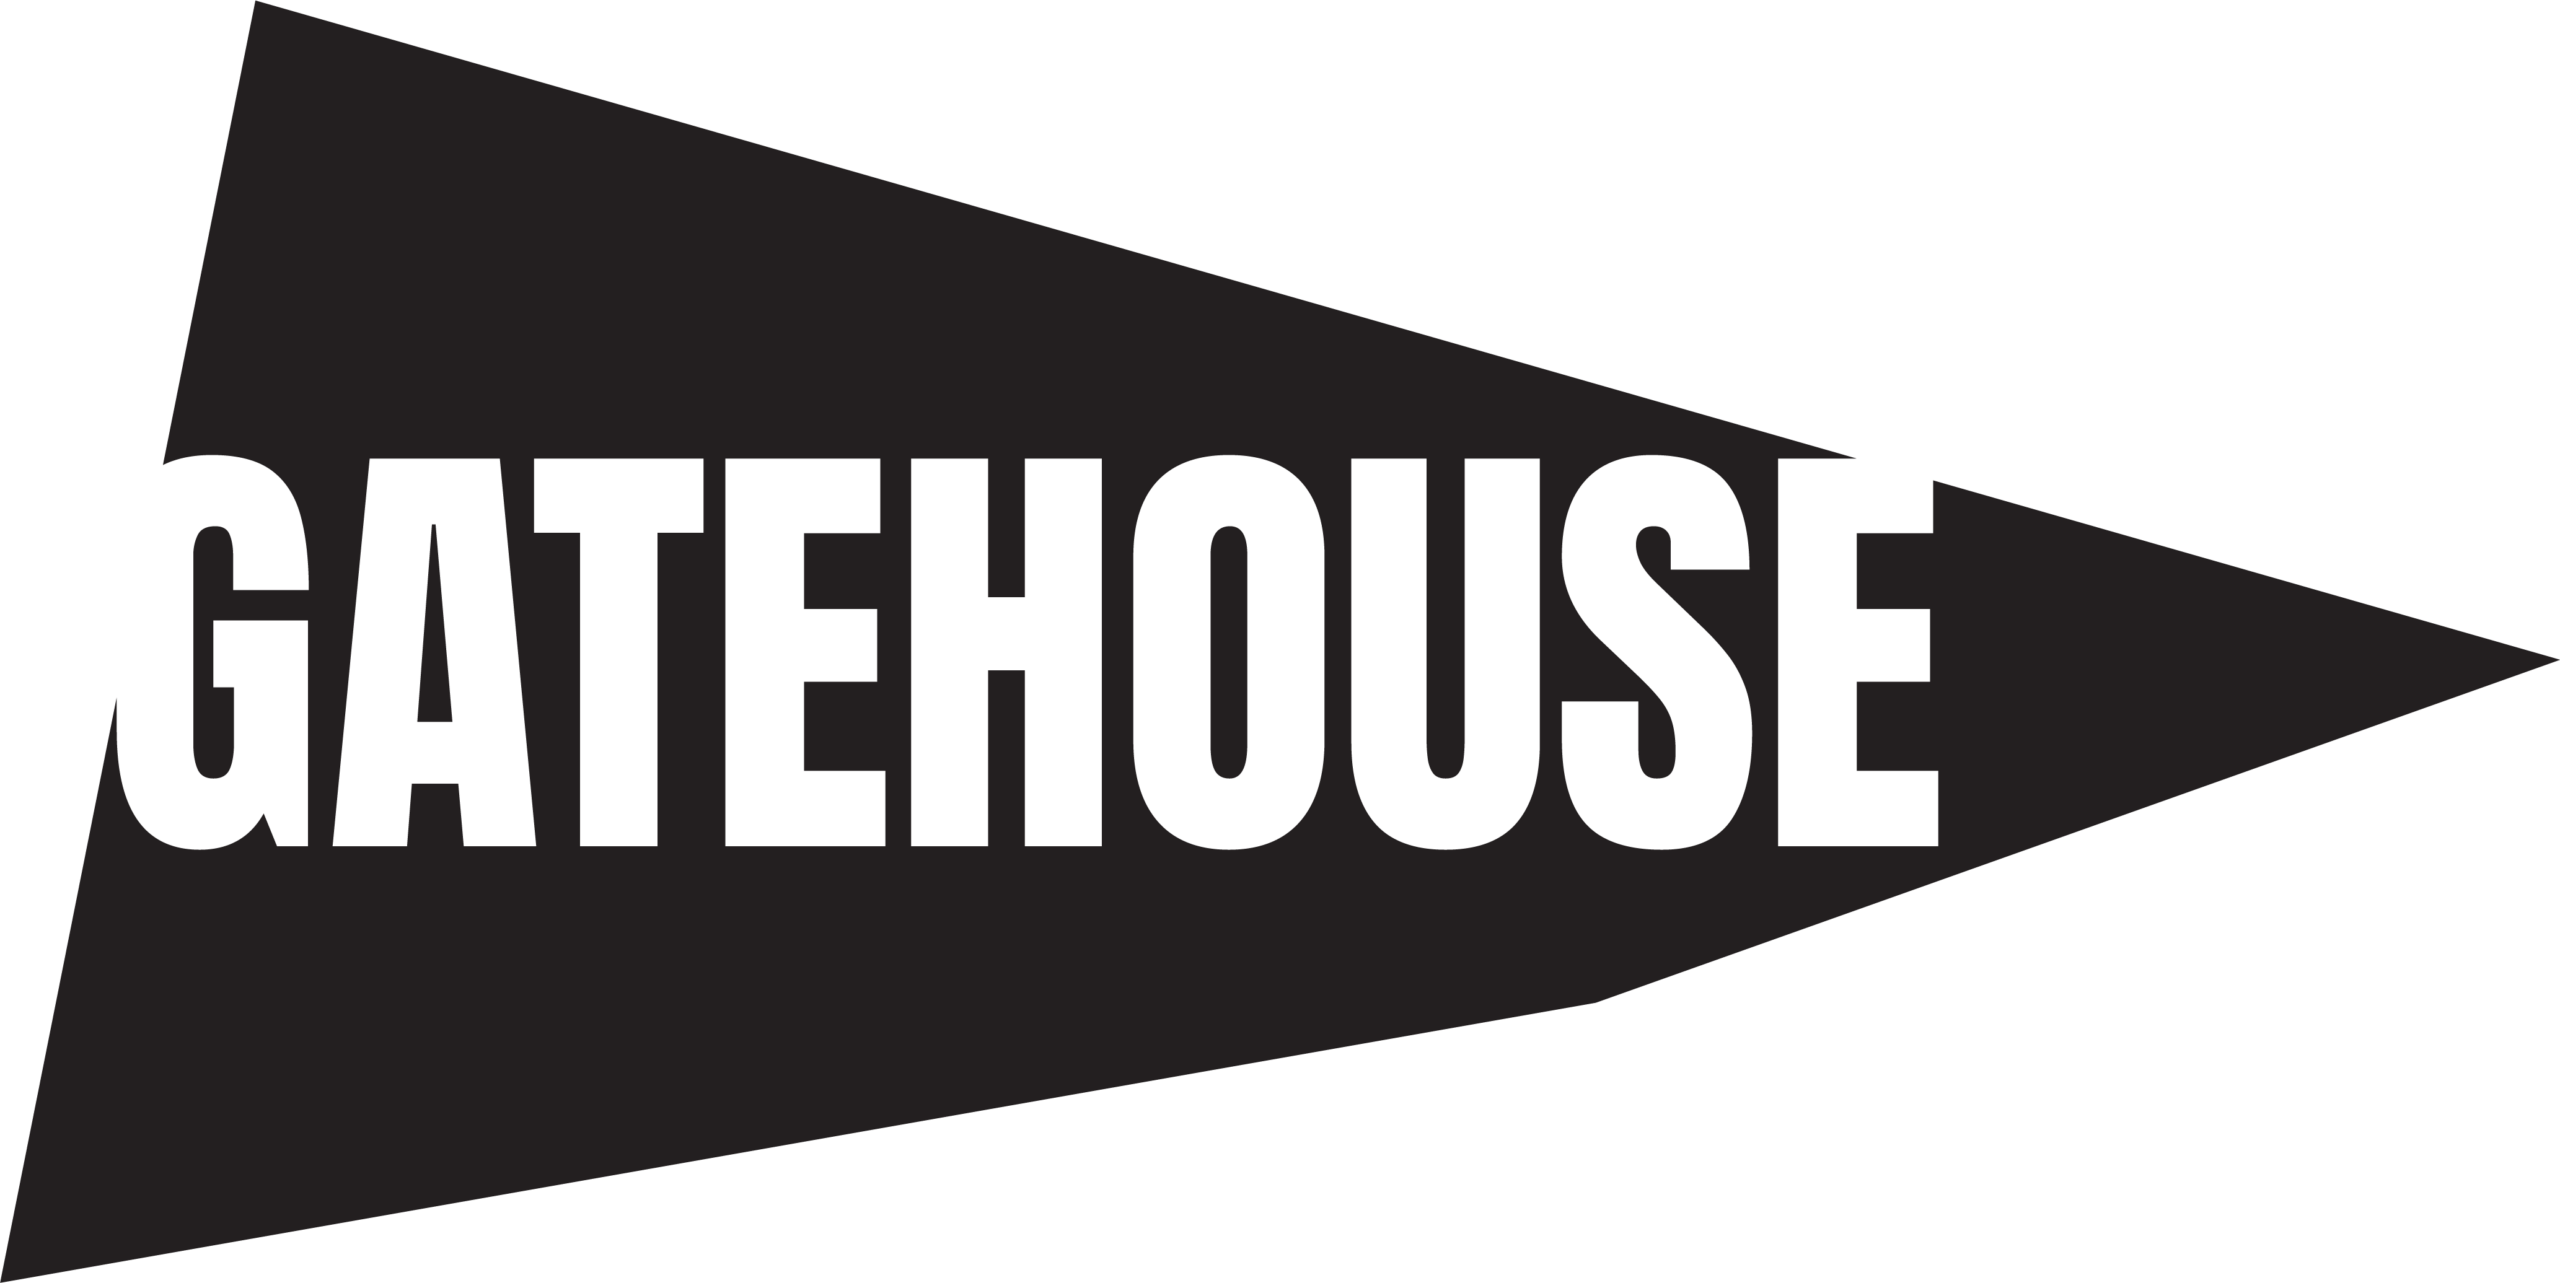 The_Gatehouse_Logo_black (2)